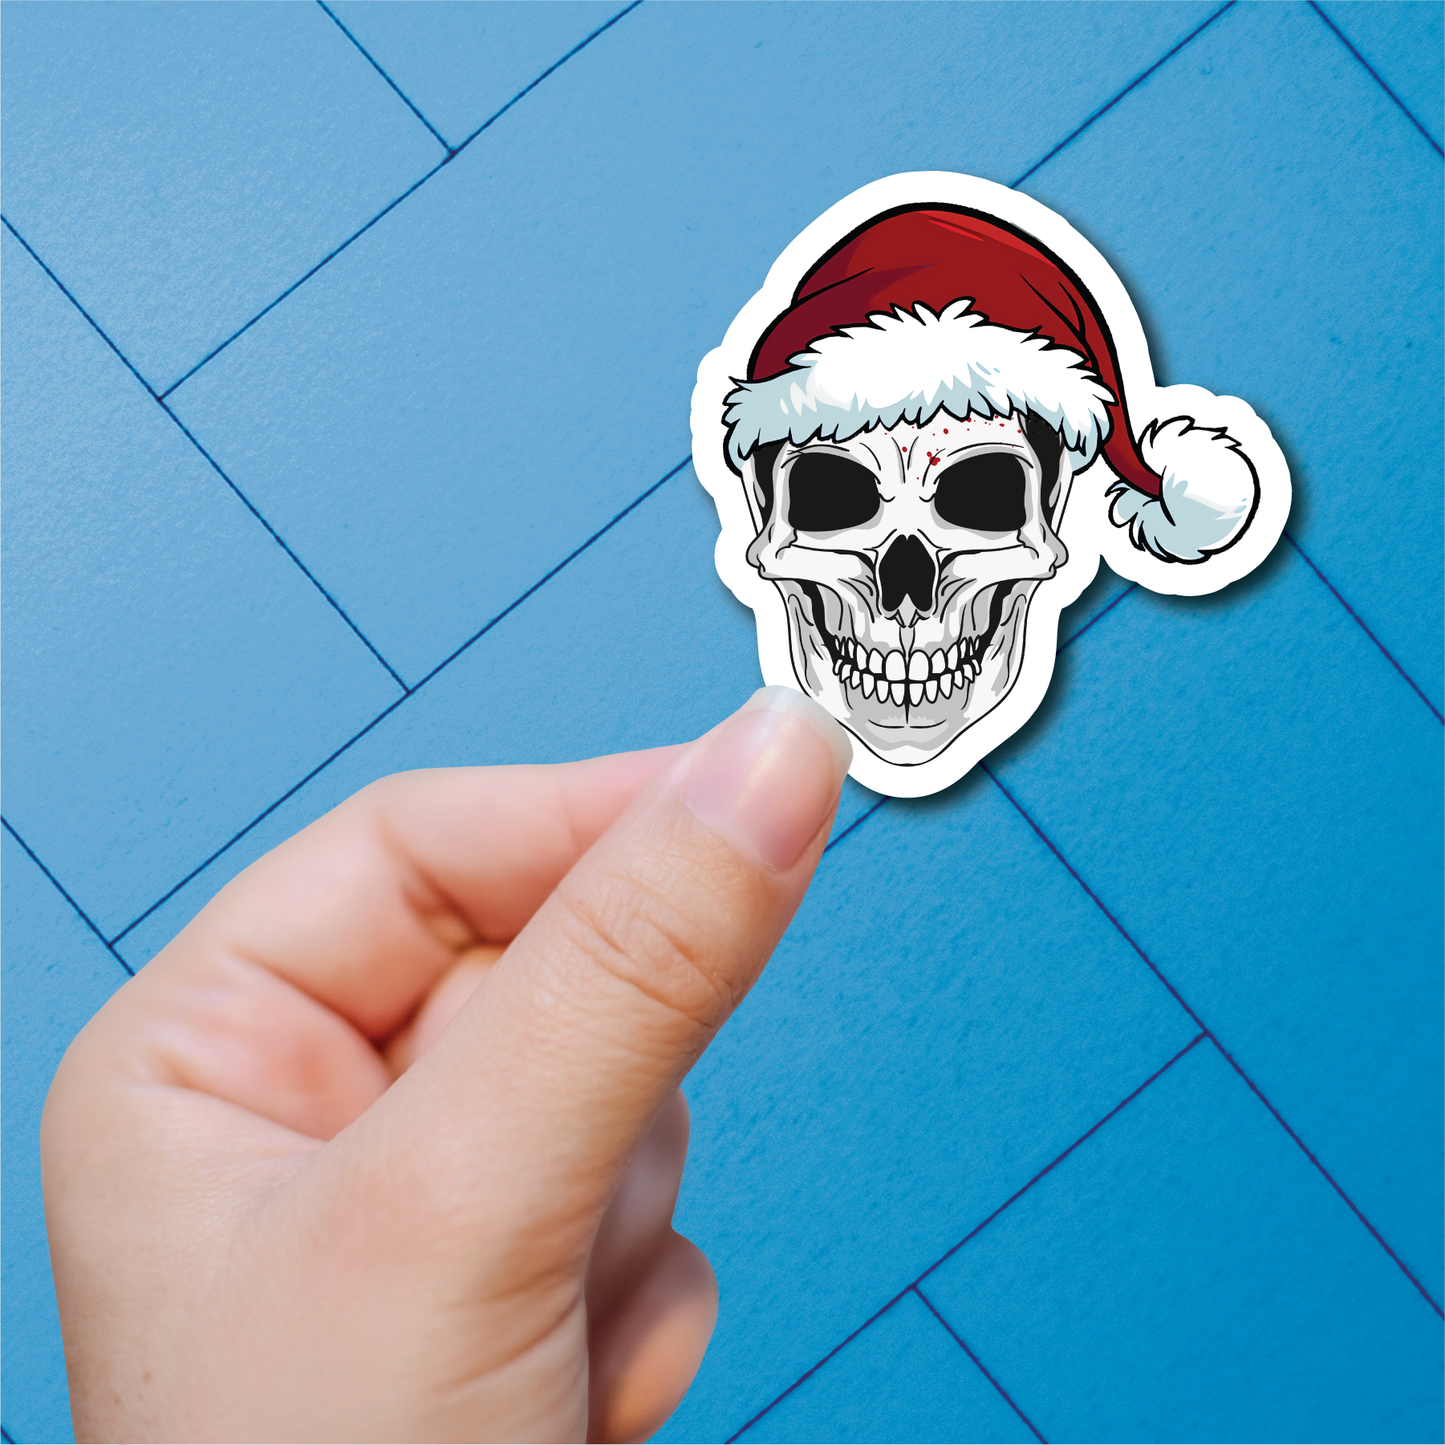 Skeleton Christmas - Full Color Vinyl Stickers (SHIPS IN 3-7 BUS DAYS)